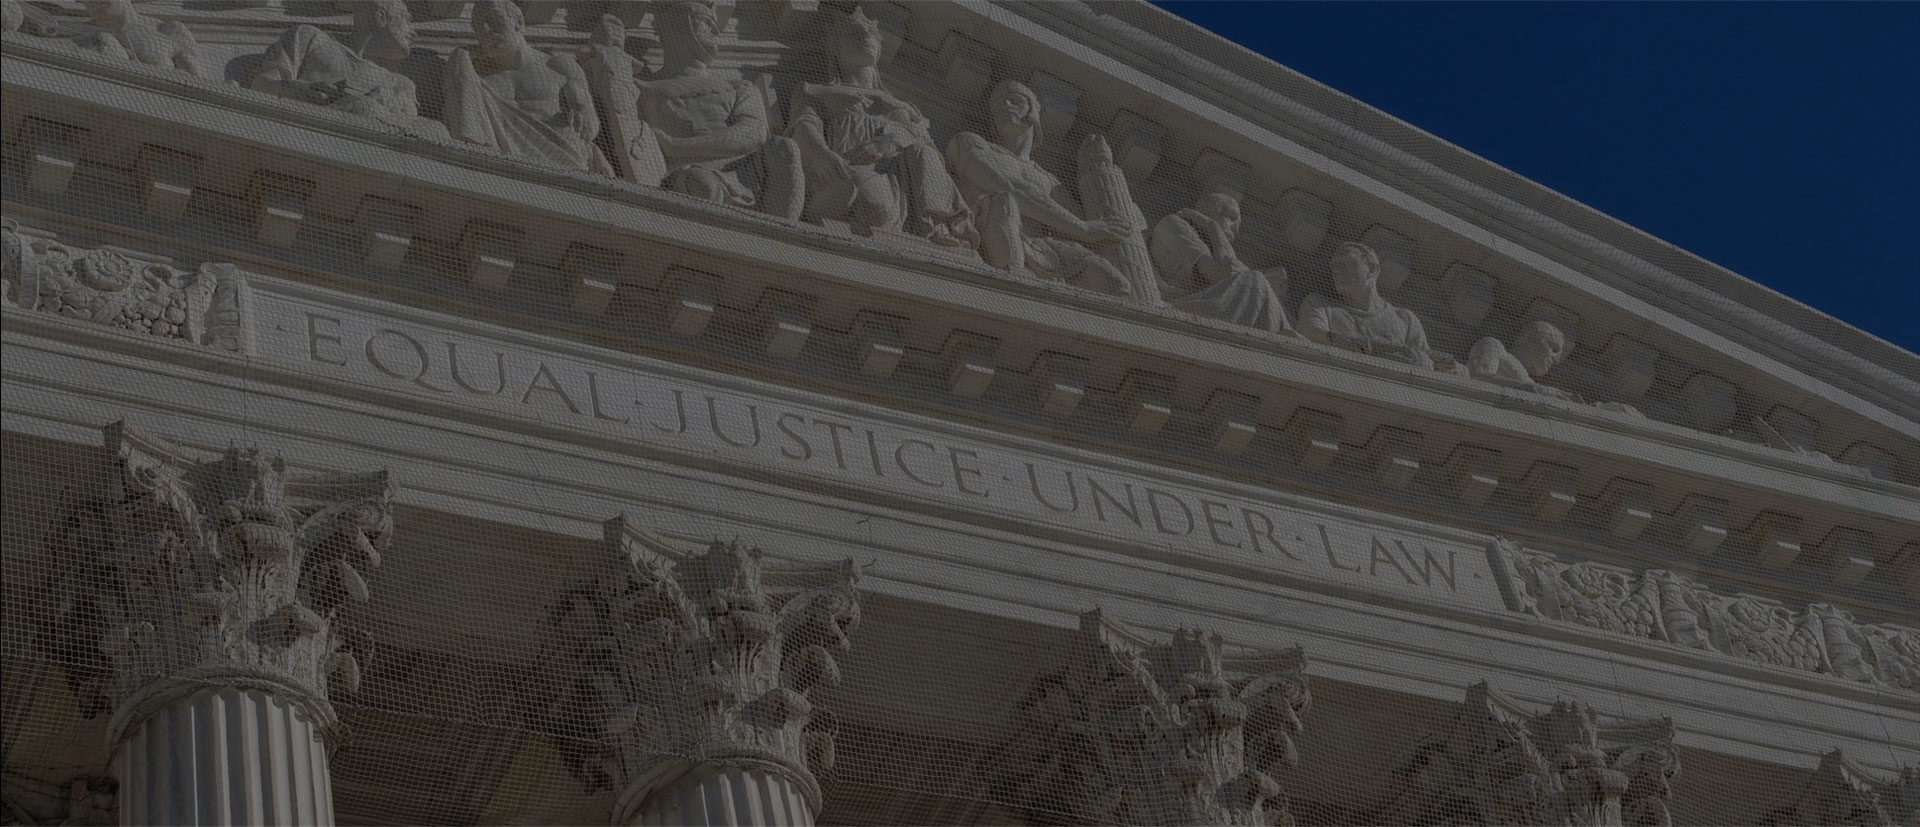 U.S. Supreme Court Architectural Detail